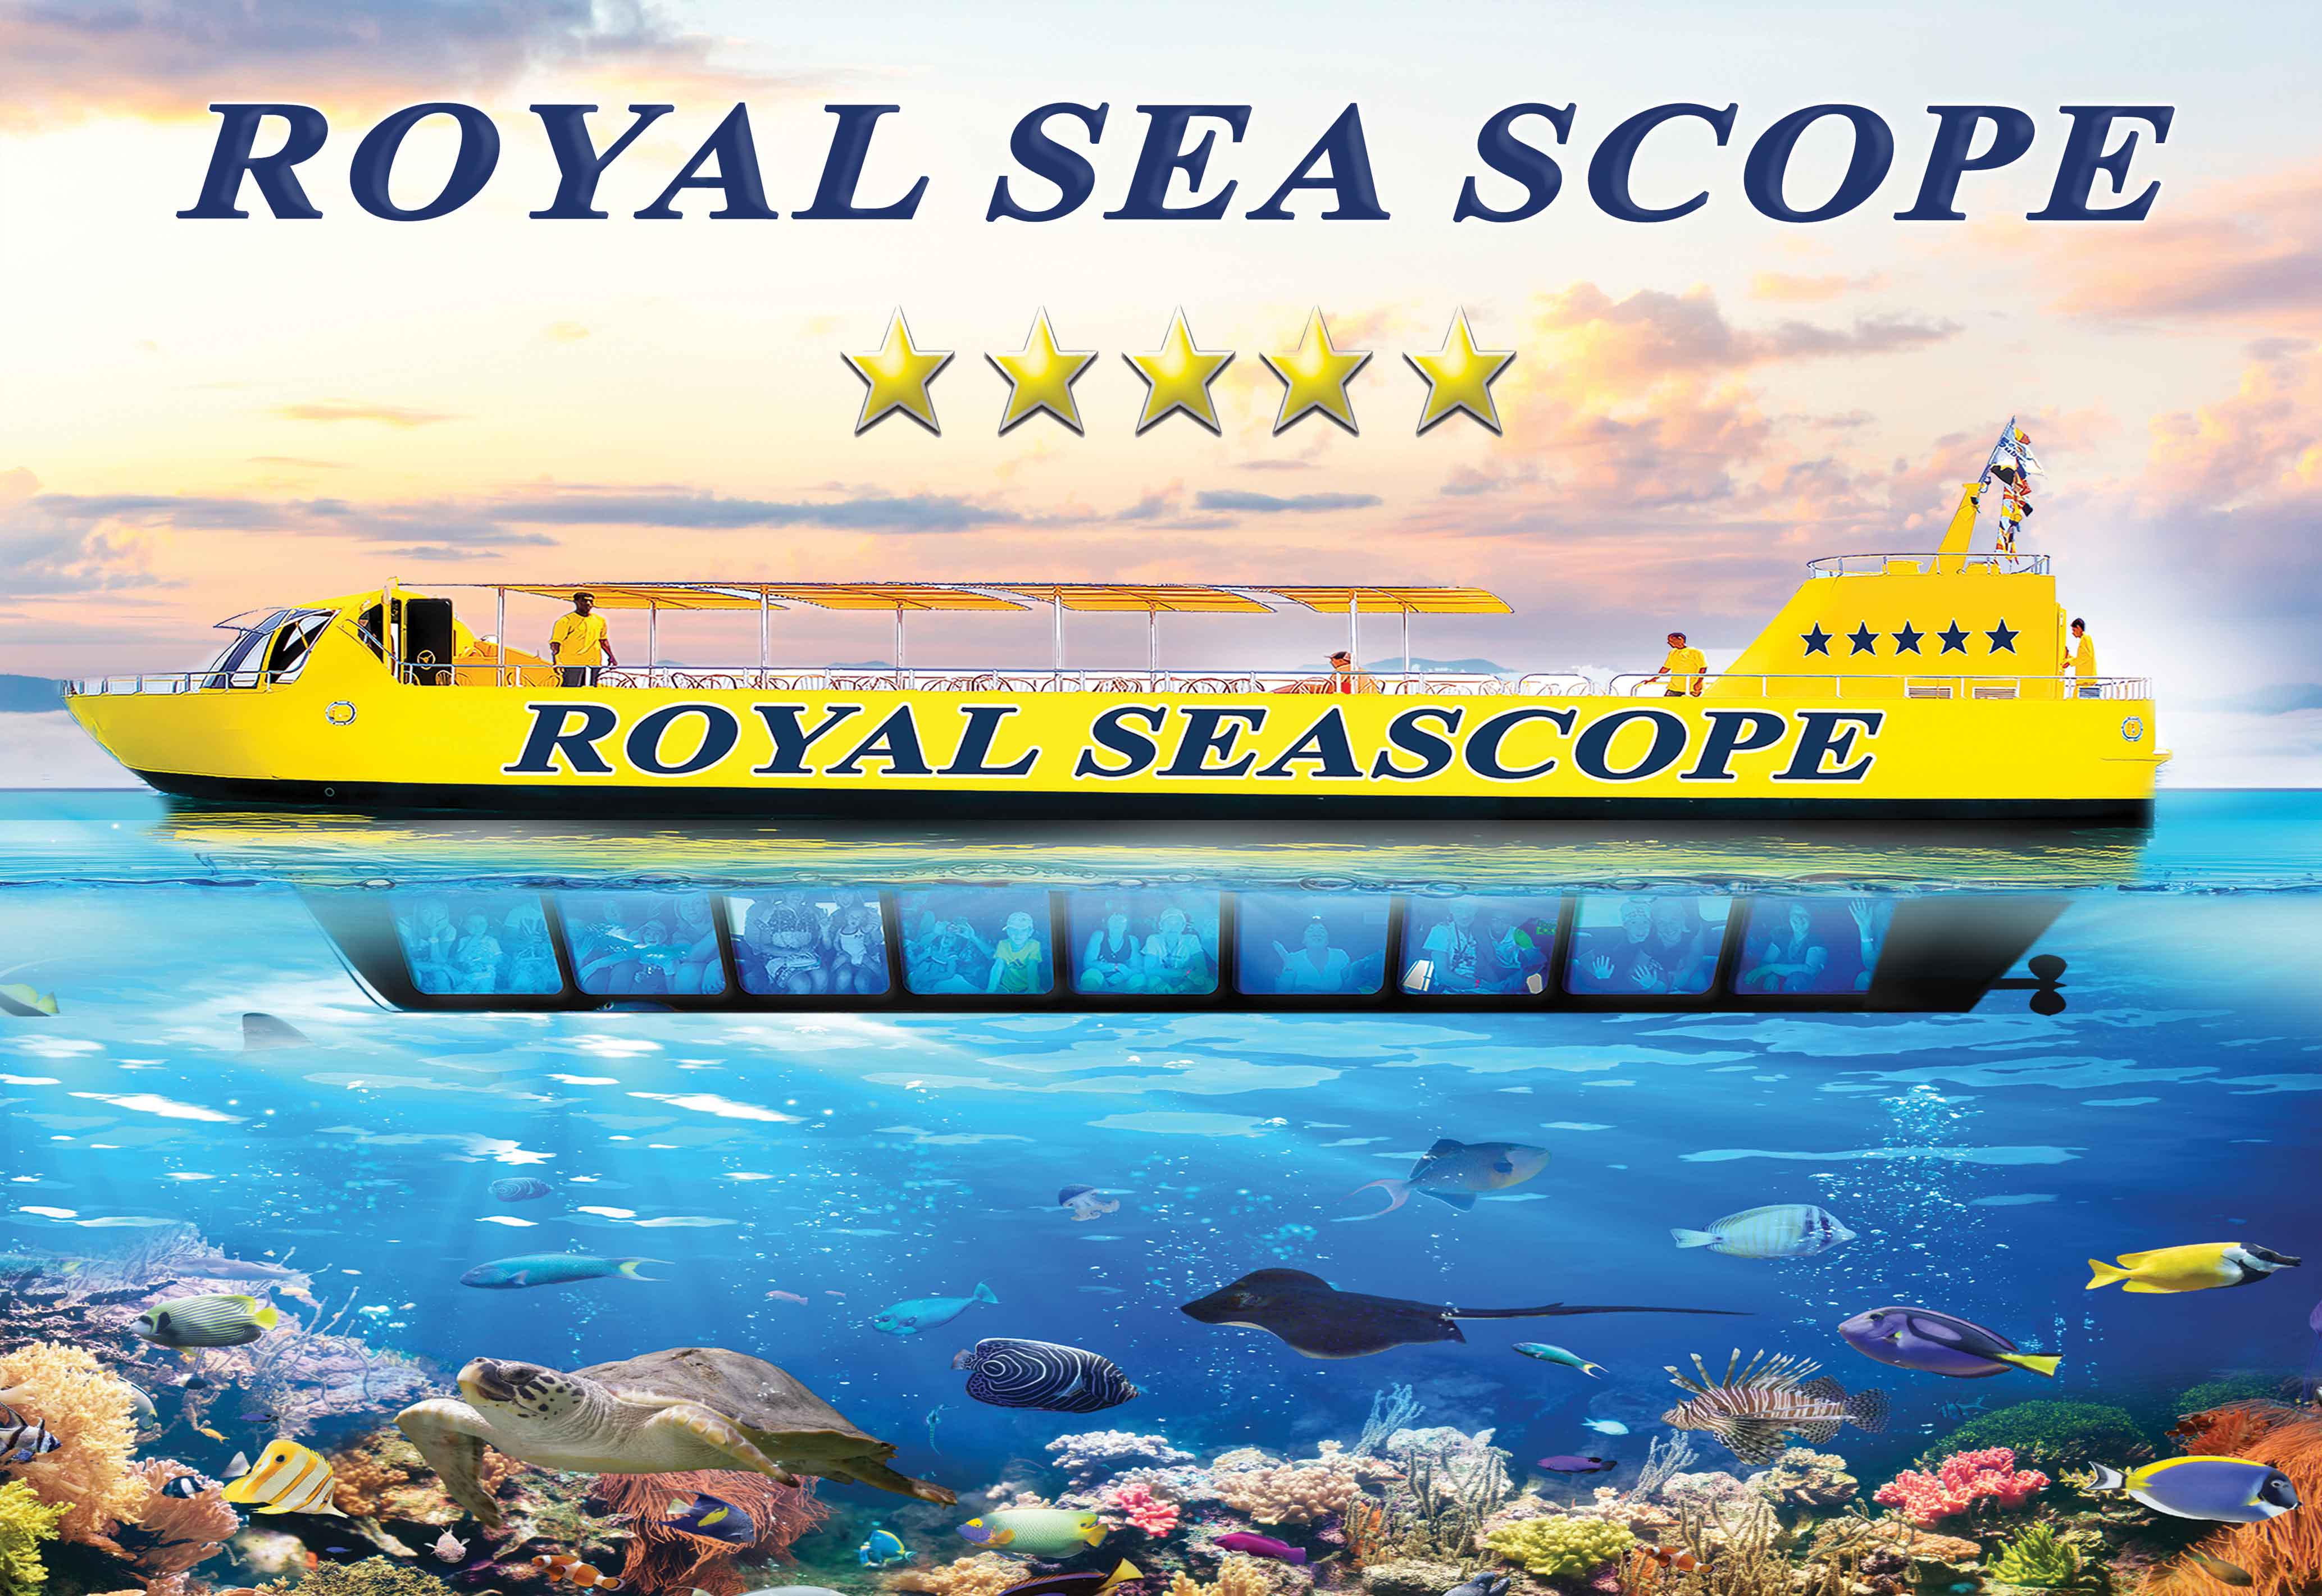 Royal Sea Scope